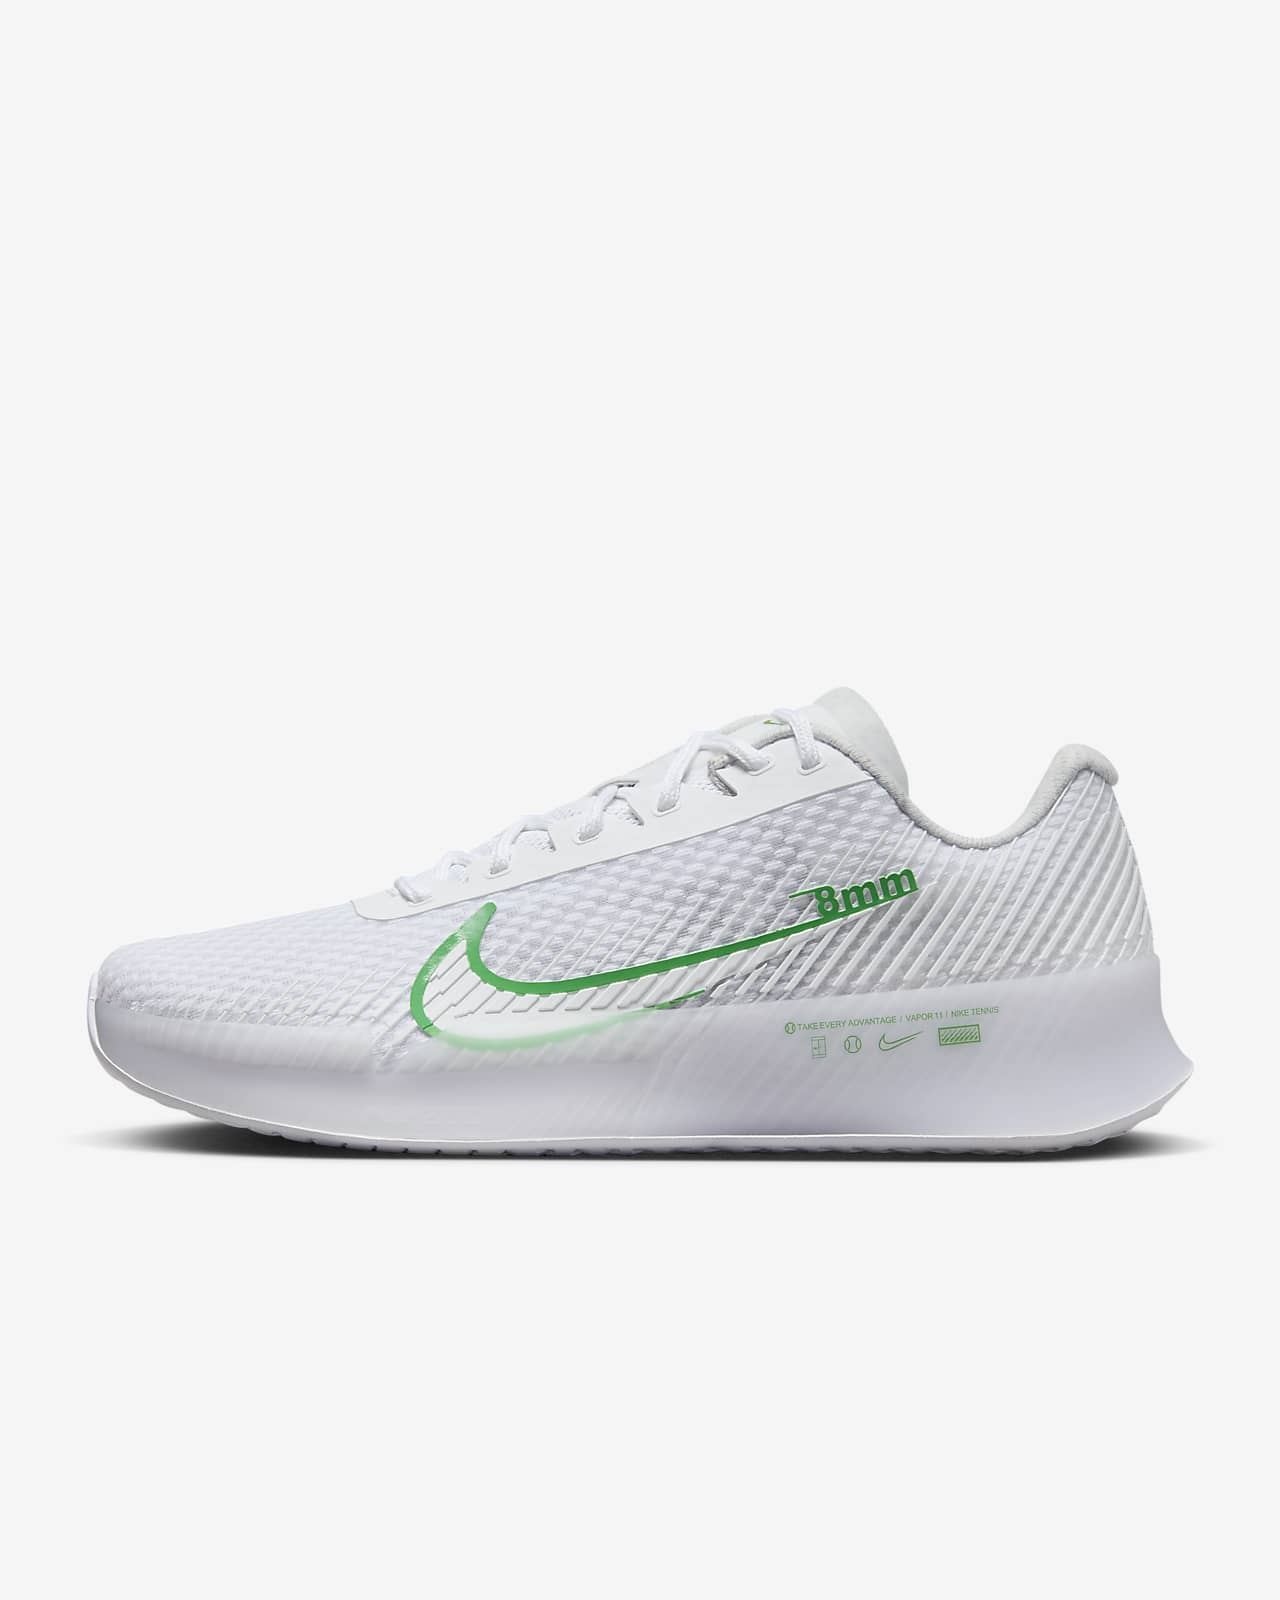 Calzado de tenis de cancha dura para hombre NikeCourt Air Vapor 11. Nike.com